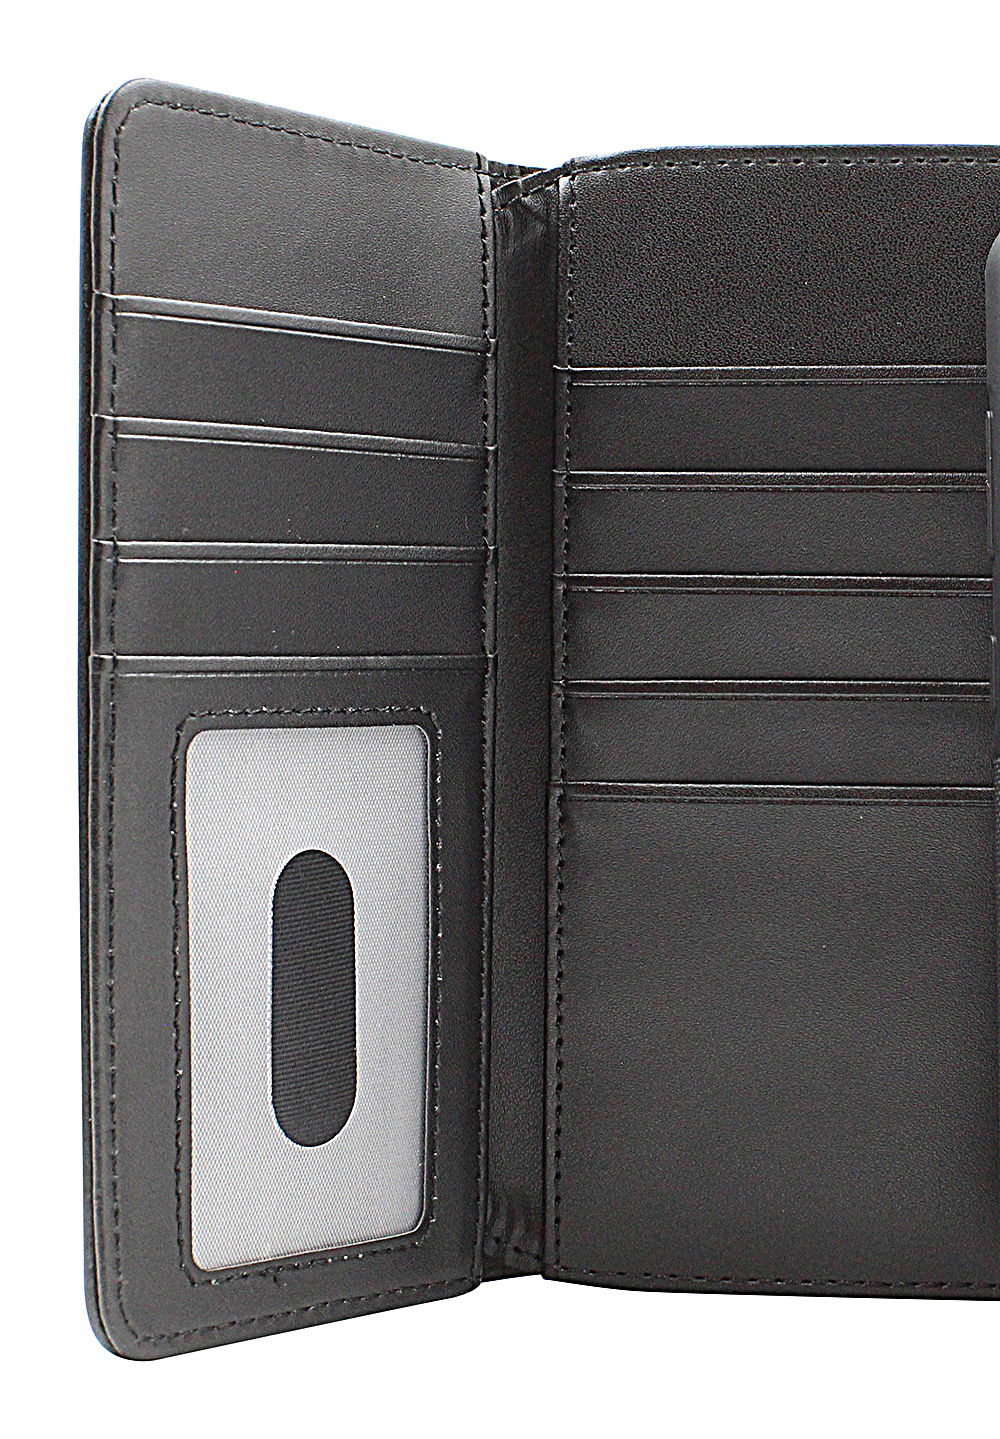 Skimblocker XL Magnet Wallet Sony Xperia 1 V 5G (XQ-DQ72)